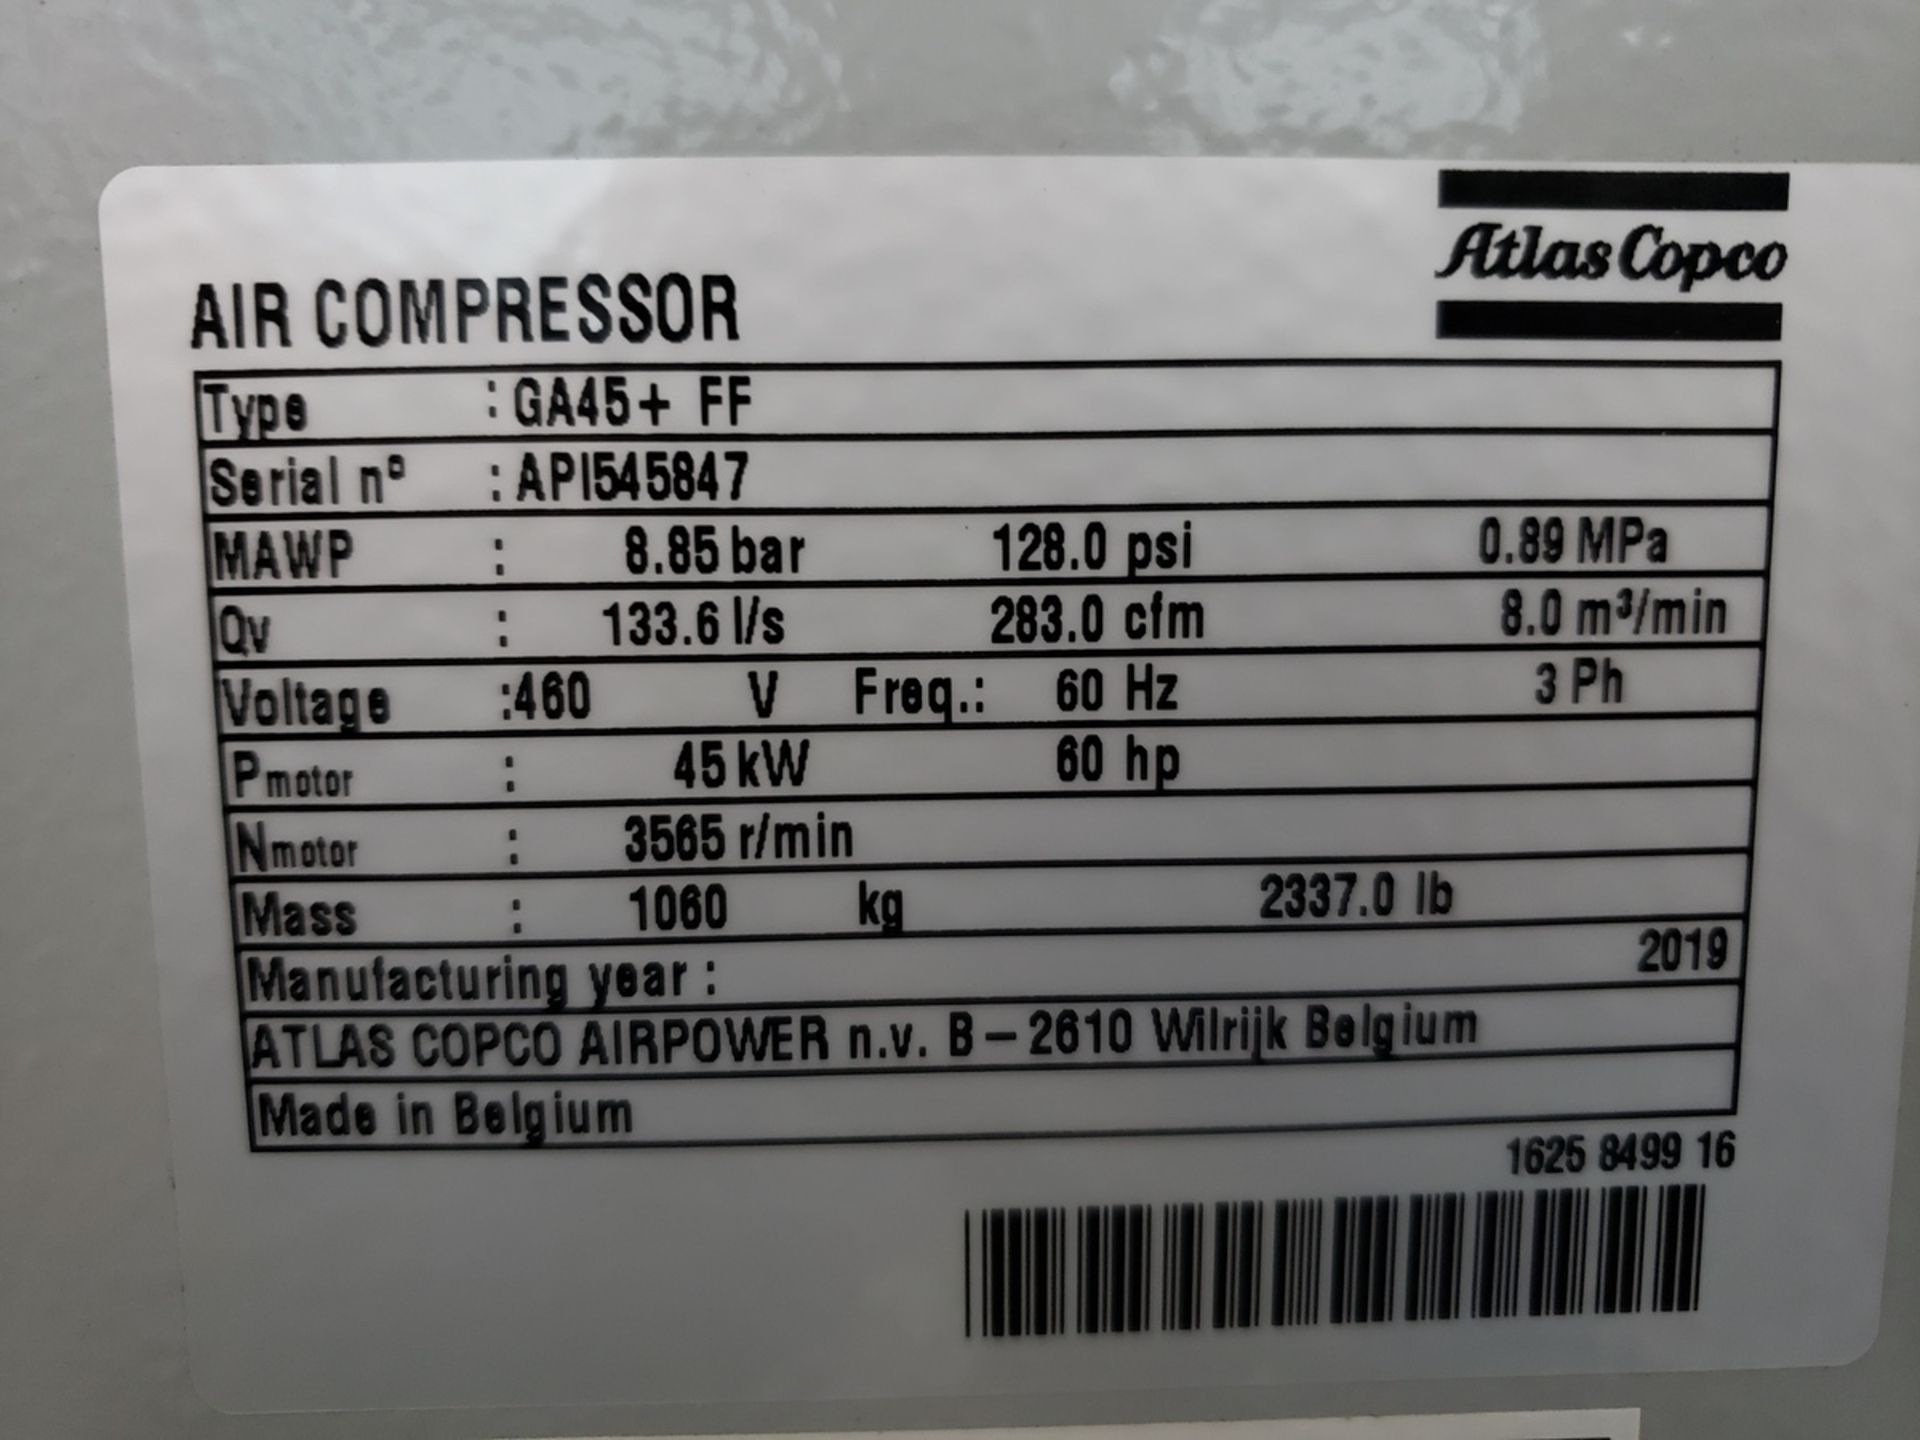 Altlas Copco 60 HP Rotary Screw Air Compressor, M# GA45+FF, S/N API545847 | Rig Fee $750 - Image 2 of 3